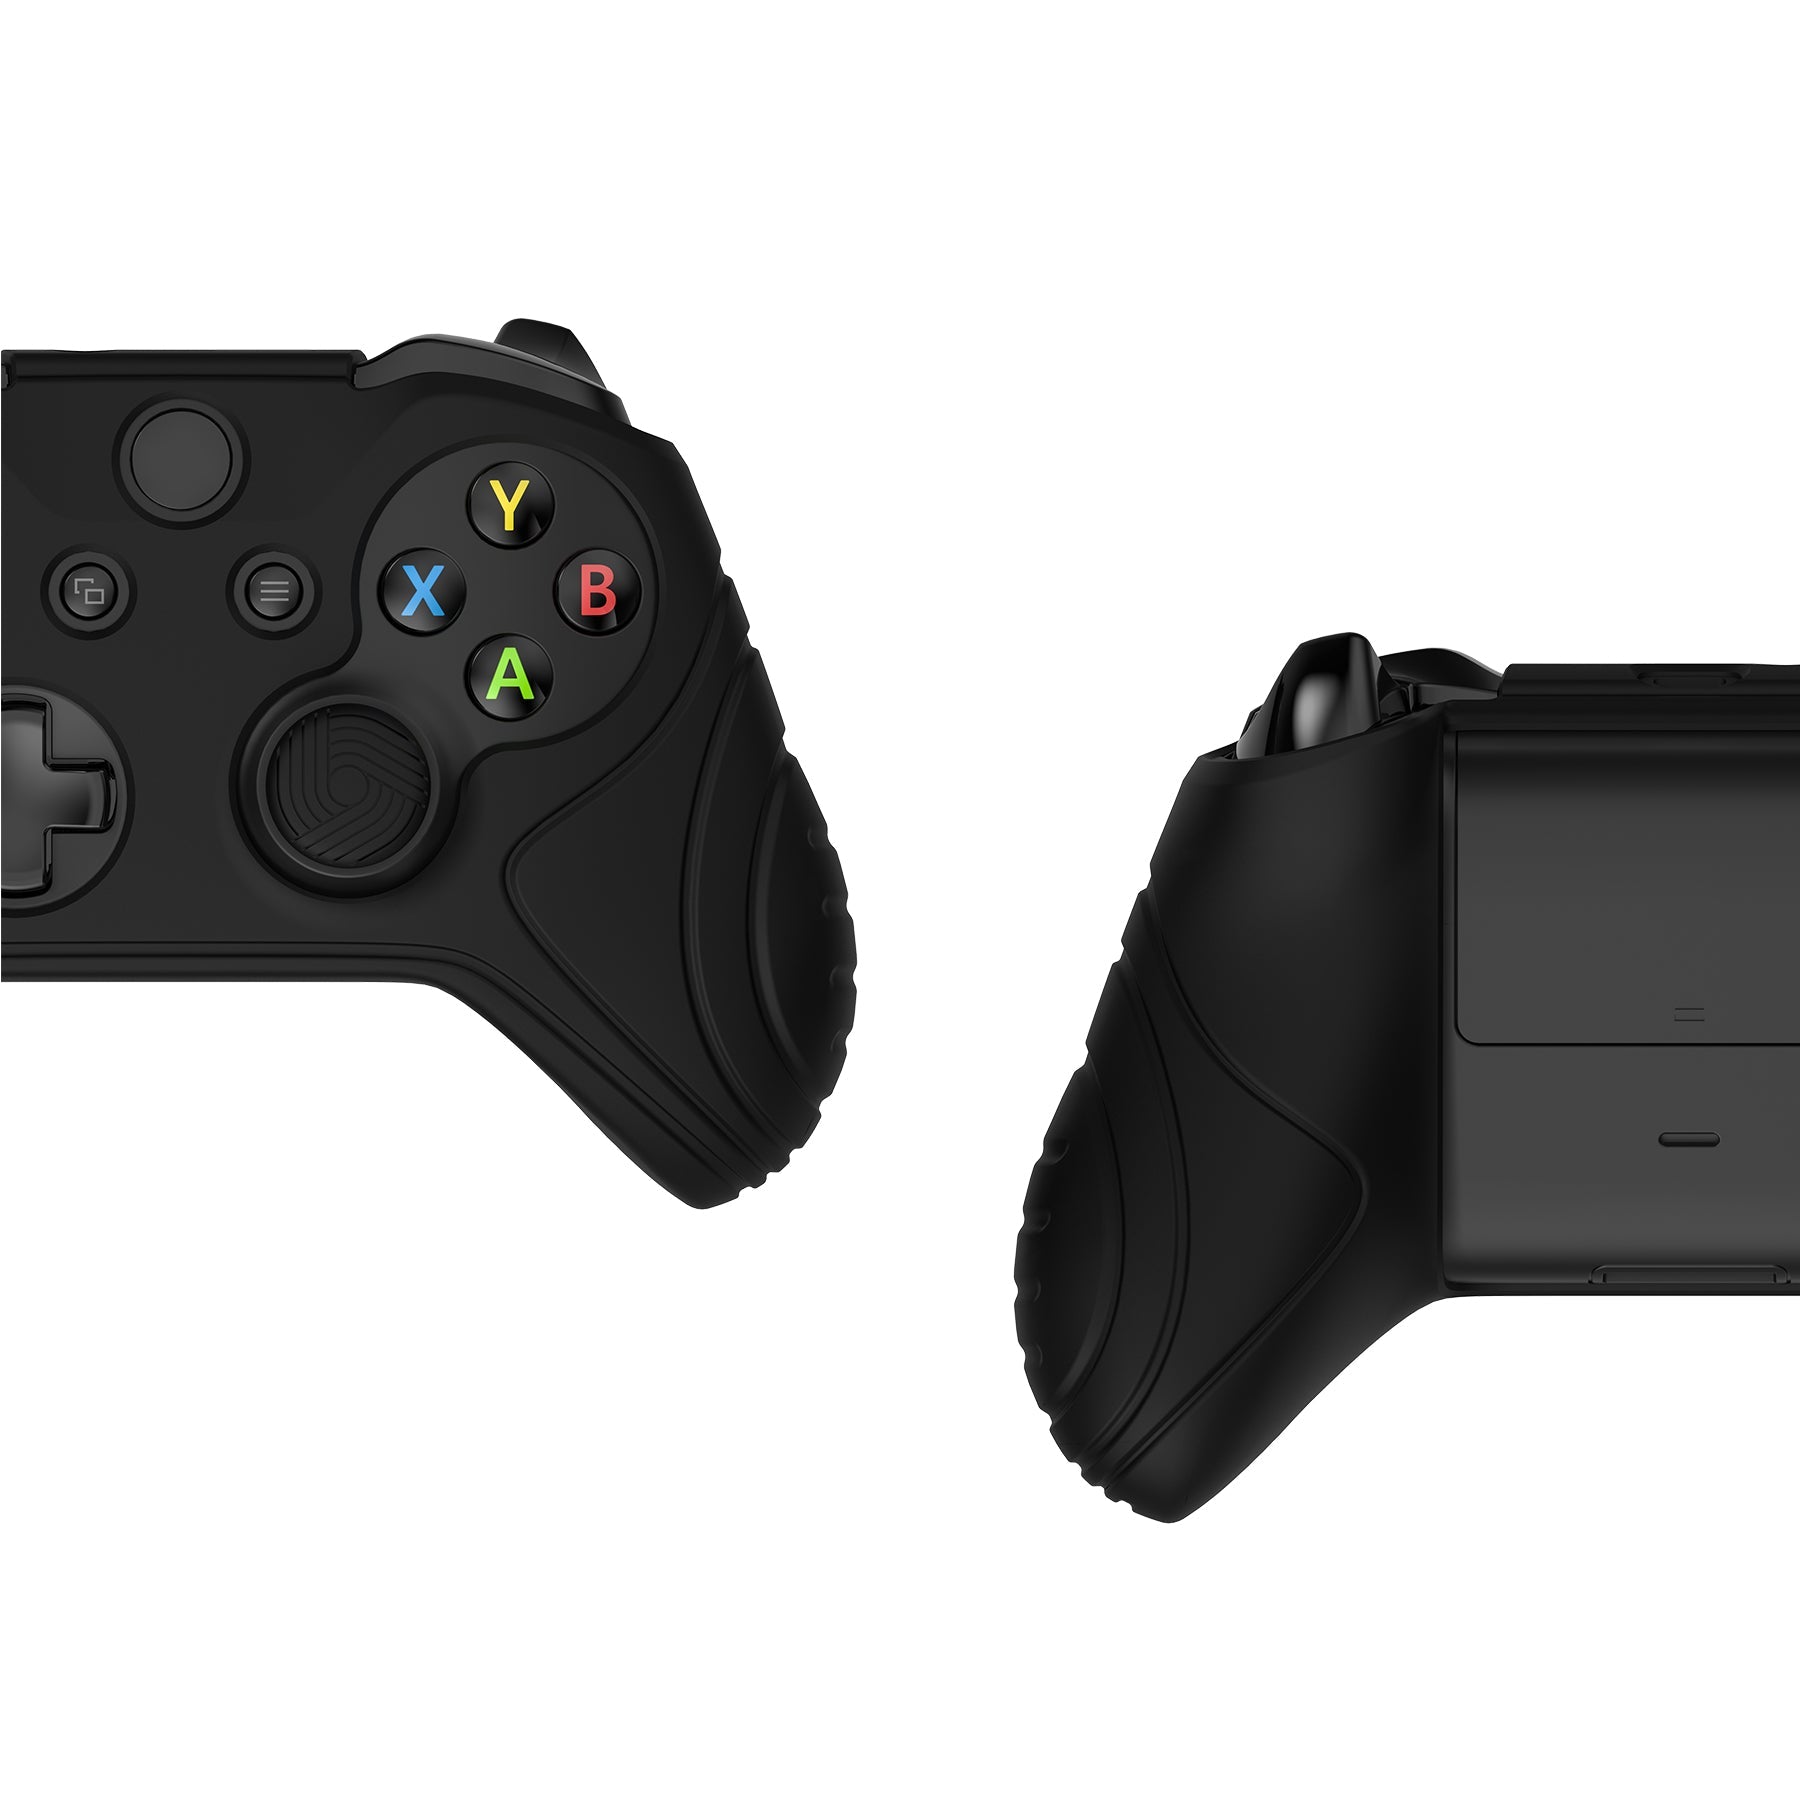 PlayVital Samurai Edition Black Anti-Slip Controller Grip Silicone Skin for Xbox One X/S Controller, Ergonomic Soft Rubber Protective Case Cover for Xbox One S/X Controller with Black Thumb Stick Caps - XOQ034 playvital